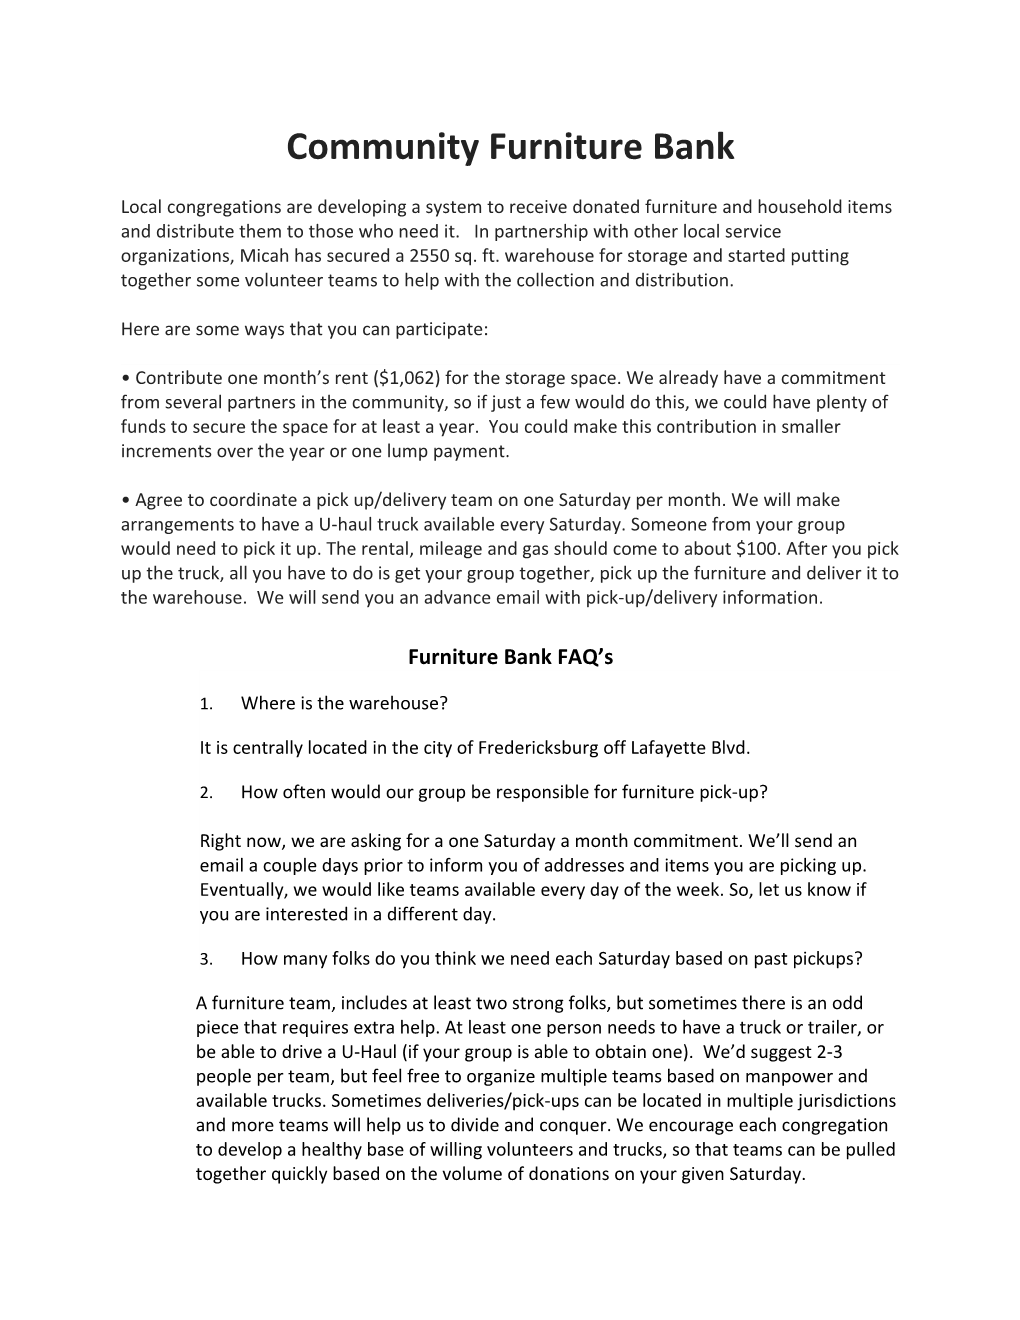 Communityfurniture Bank